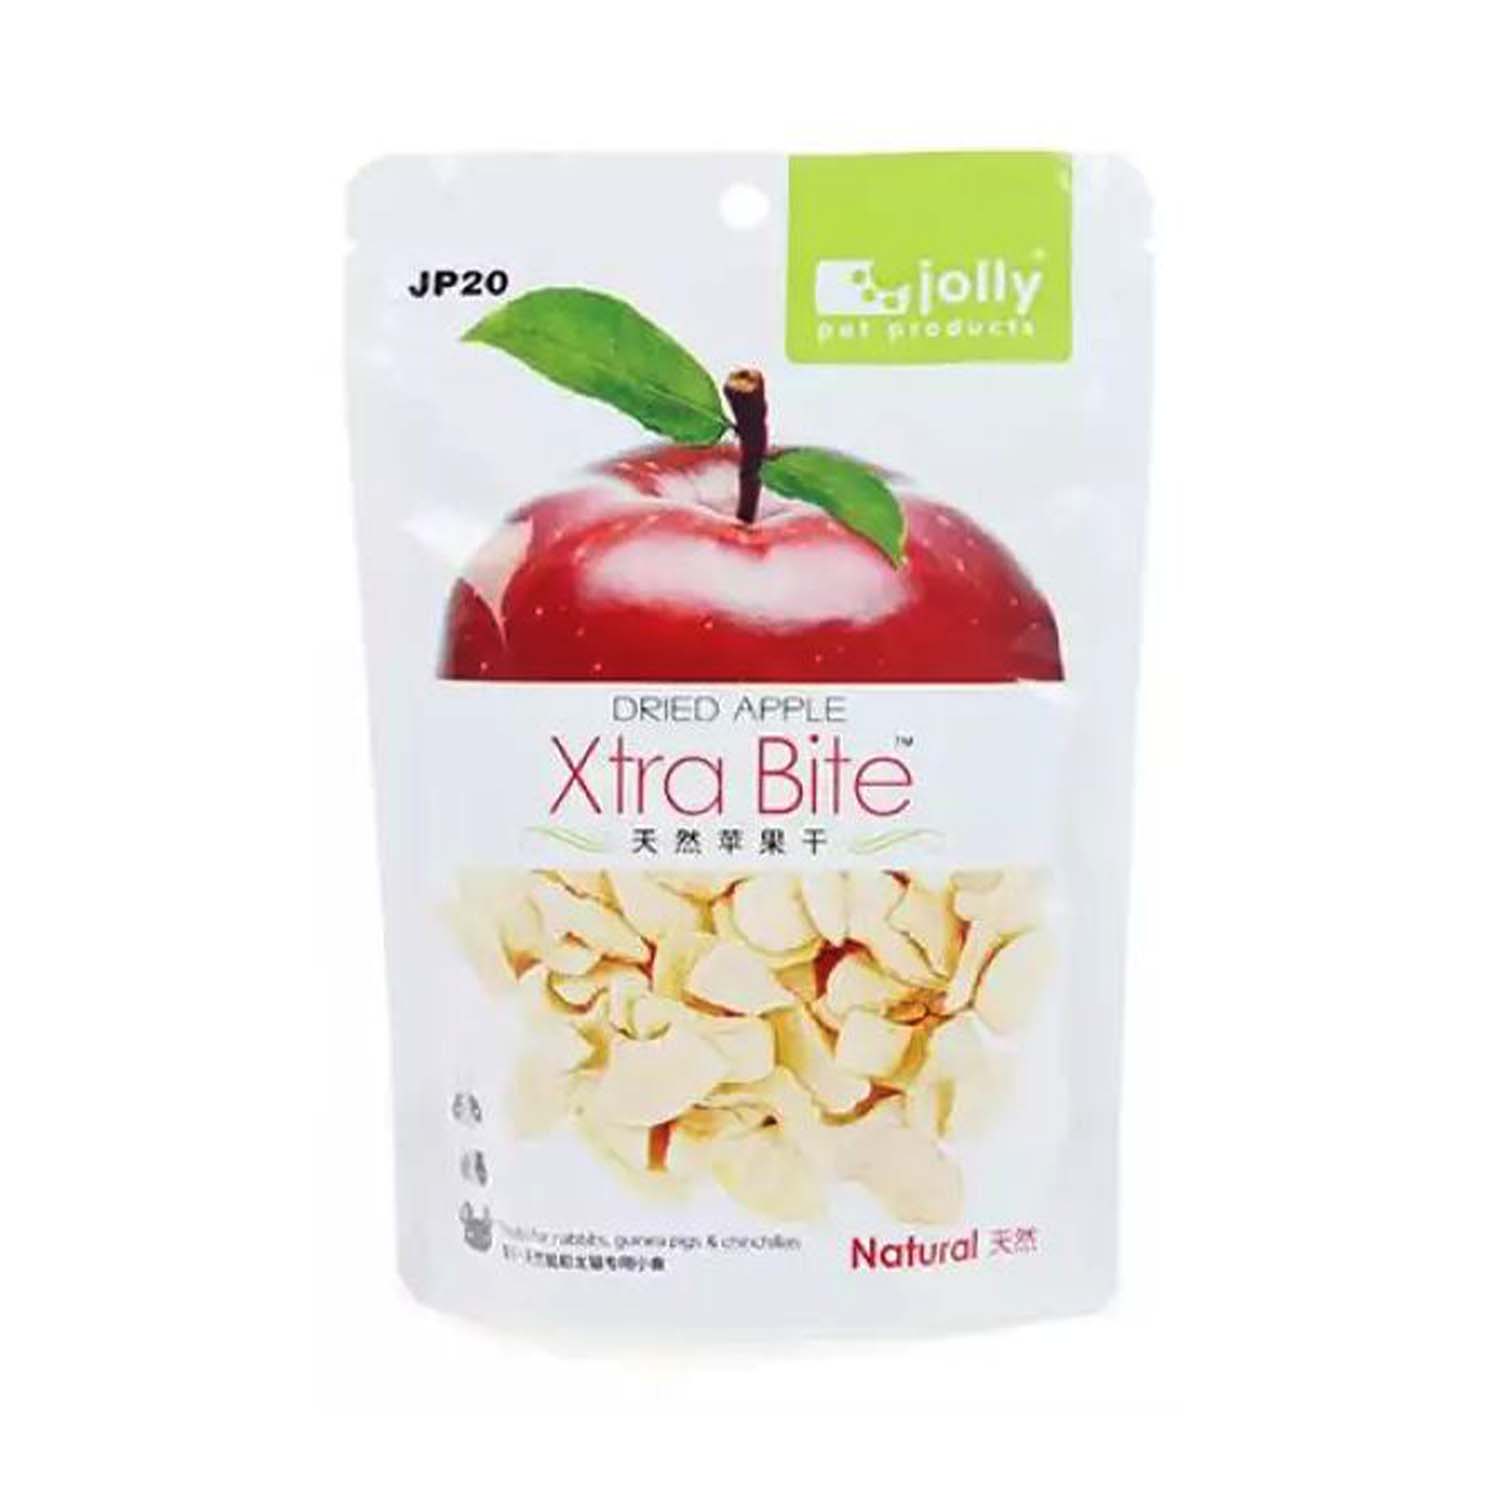 Jolly Xtra Bite Dried Apple Treat 25g JP20 